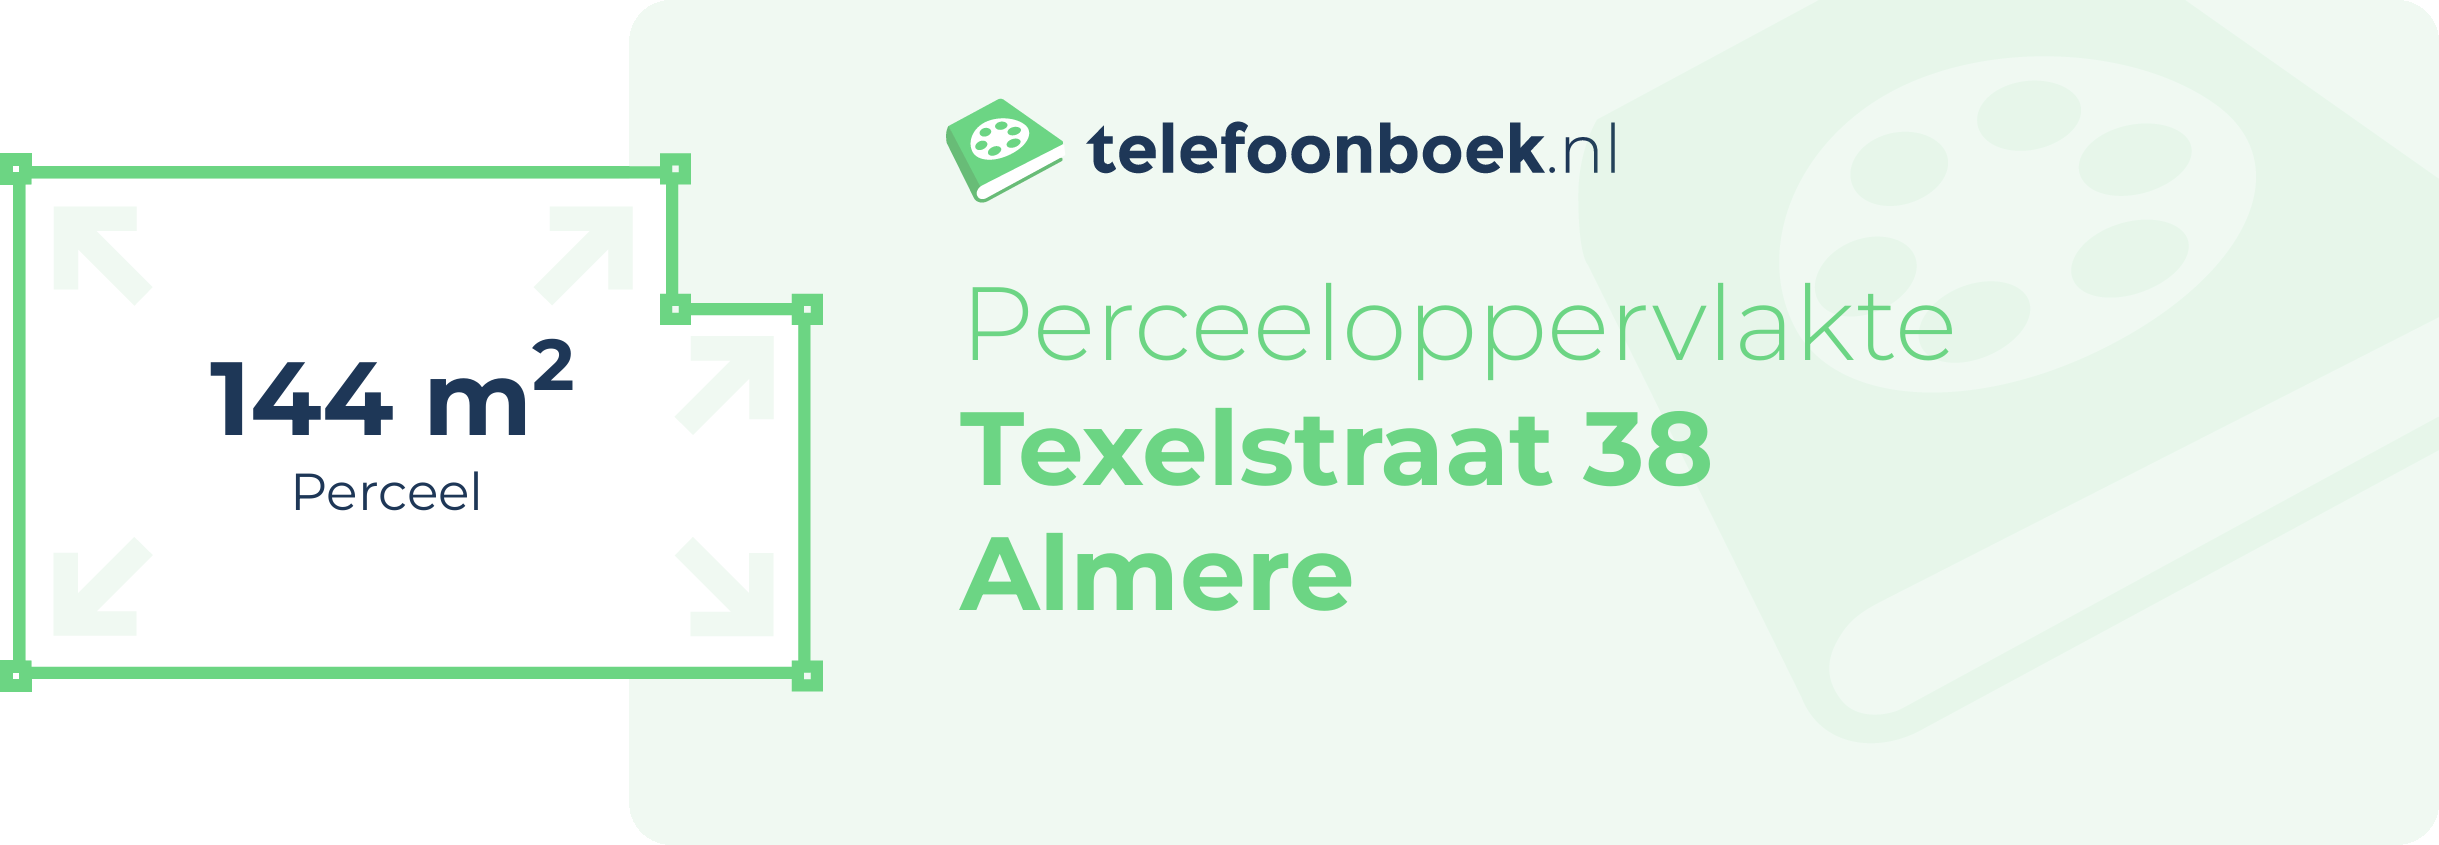 Perceeloppervlakte Texelstraat 38 Almere